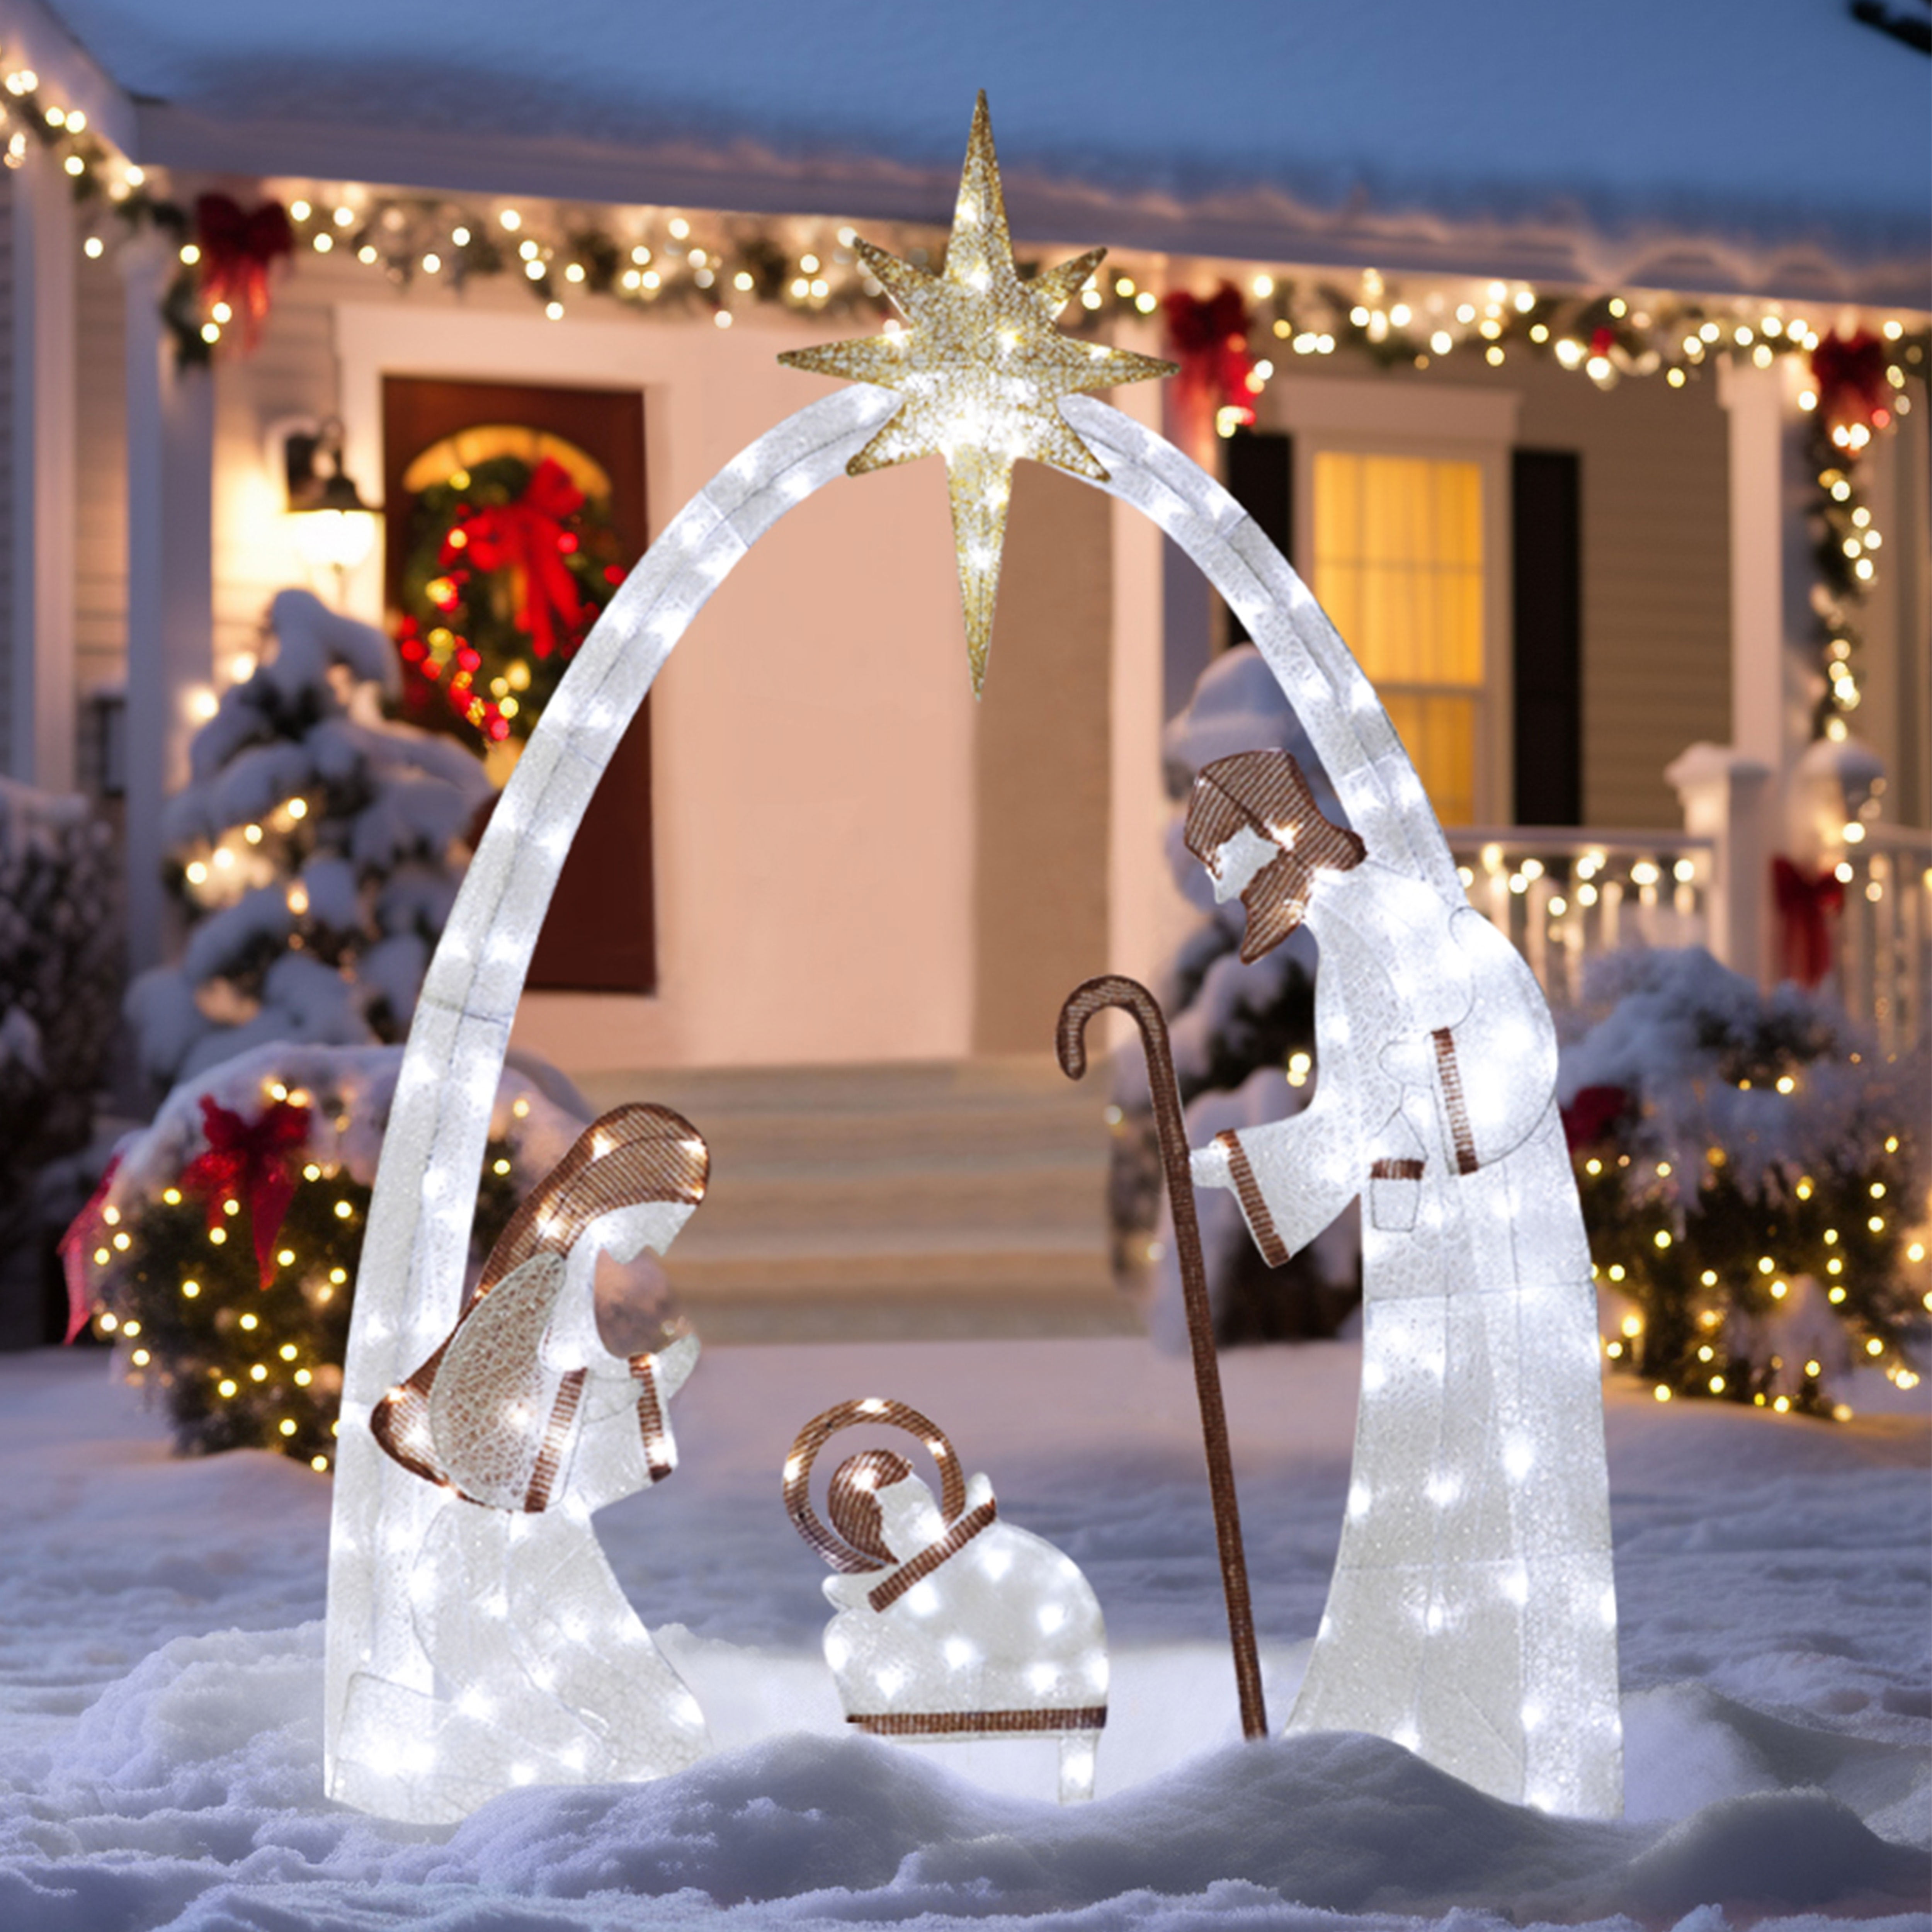 Veikous 5ft Lighted Nativity Scene Christmas Decor Outdoor W  150 Led 